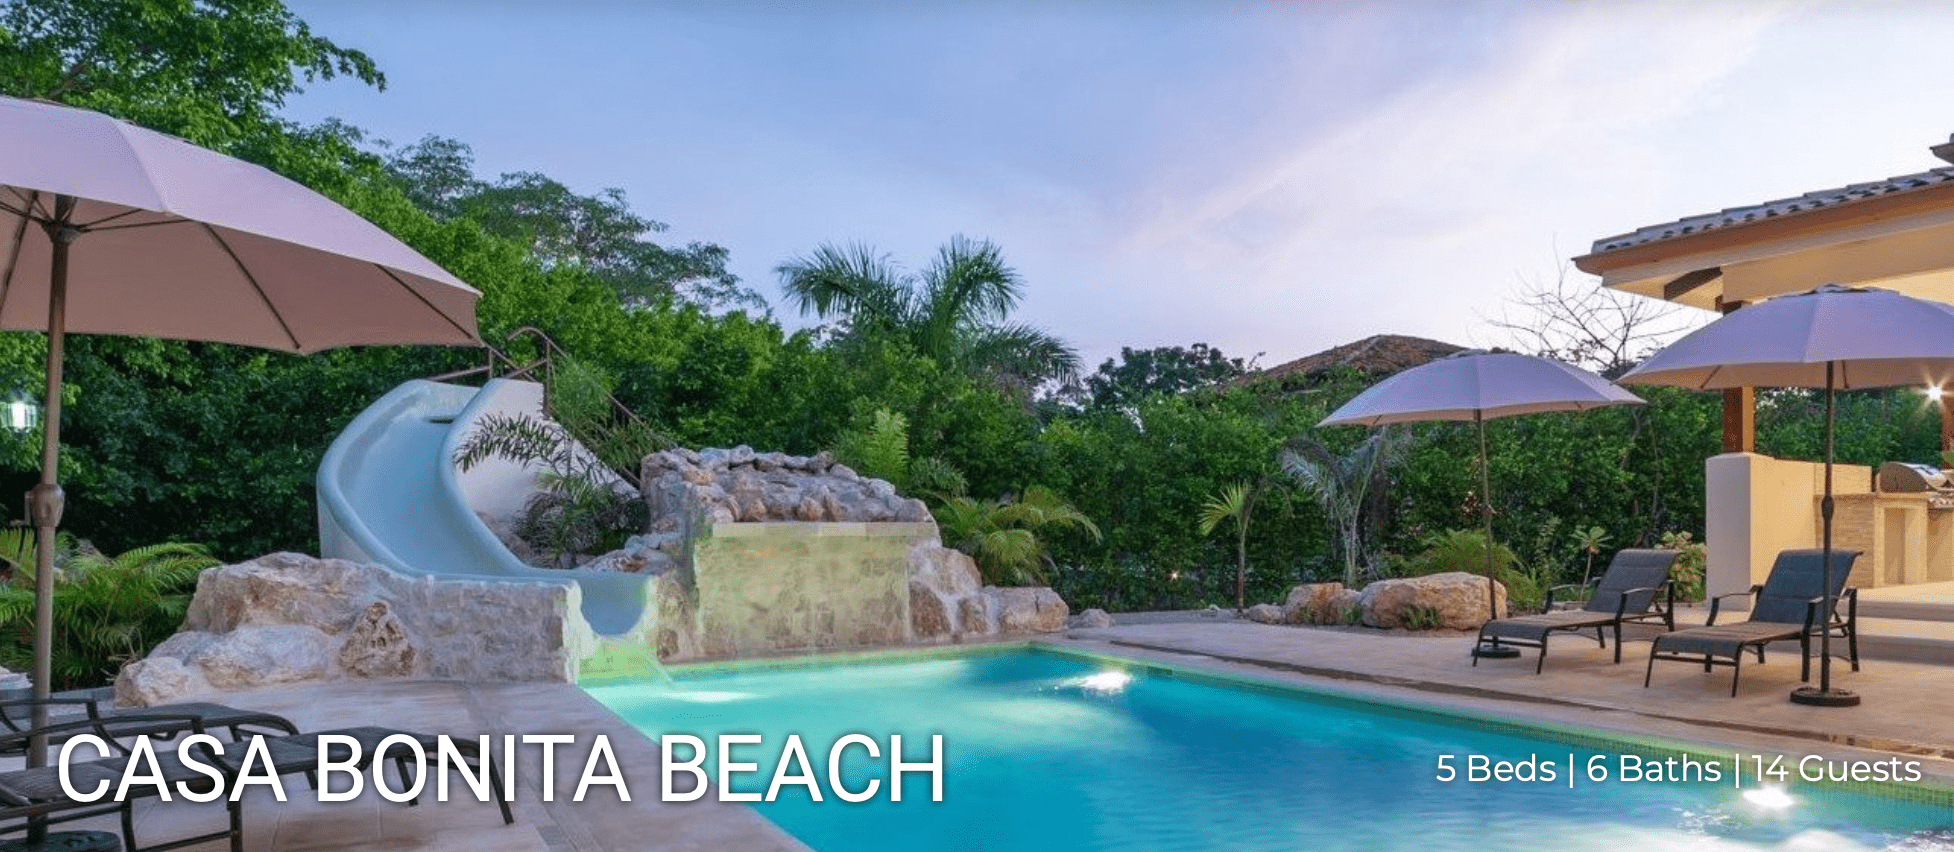 Casa Bonita Beach Tamarindo vacation rental with waterslide